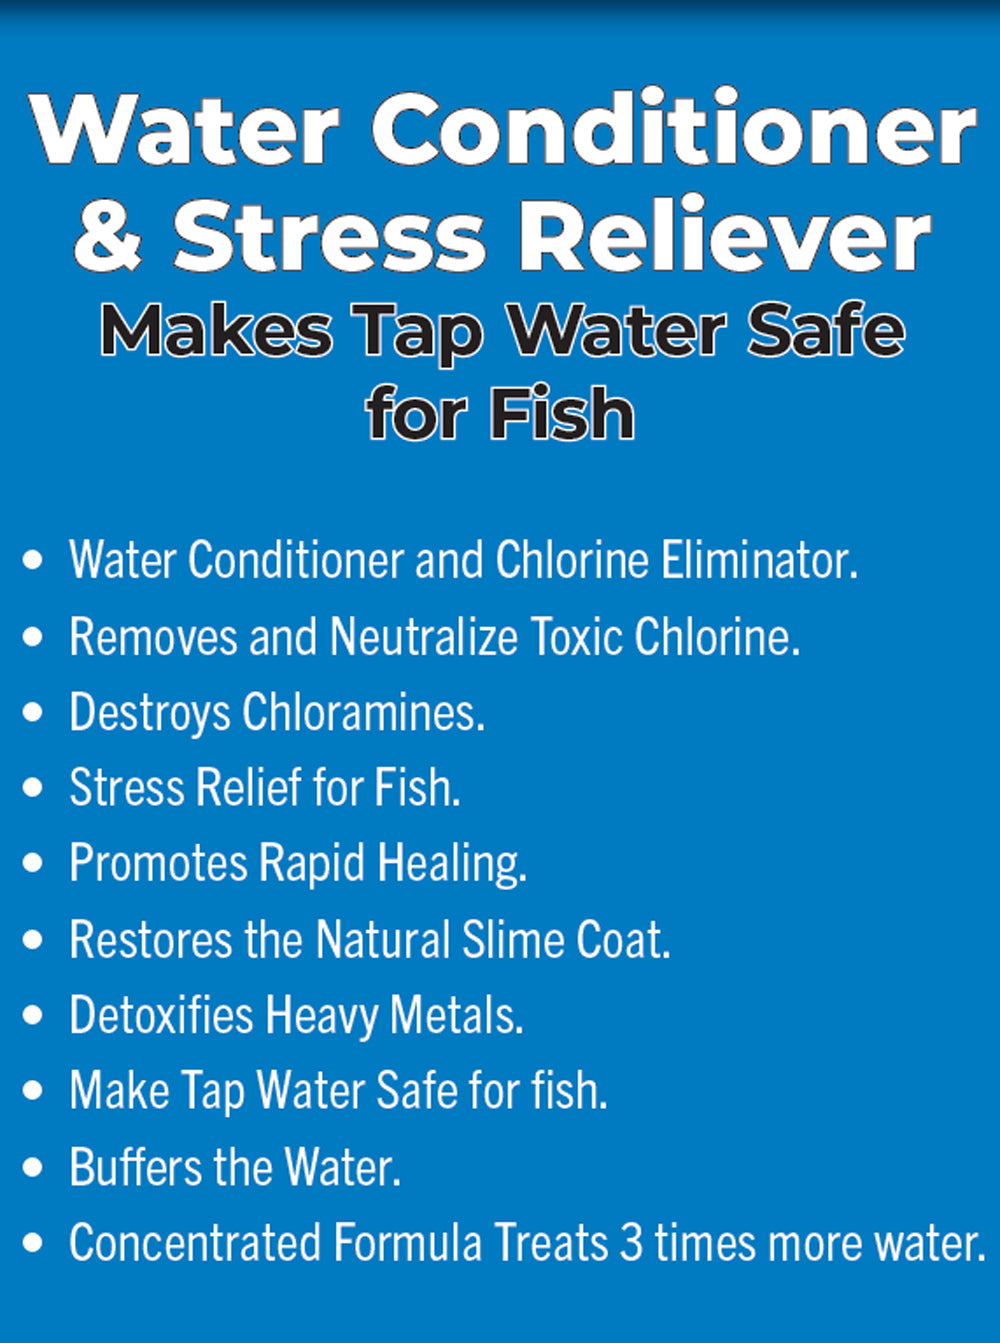 Water Conditioner & Stress Reliever 16 oz